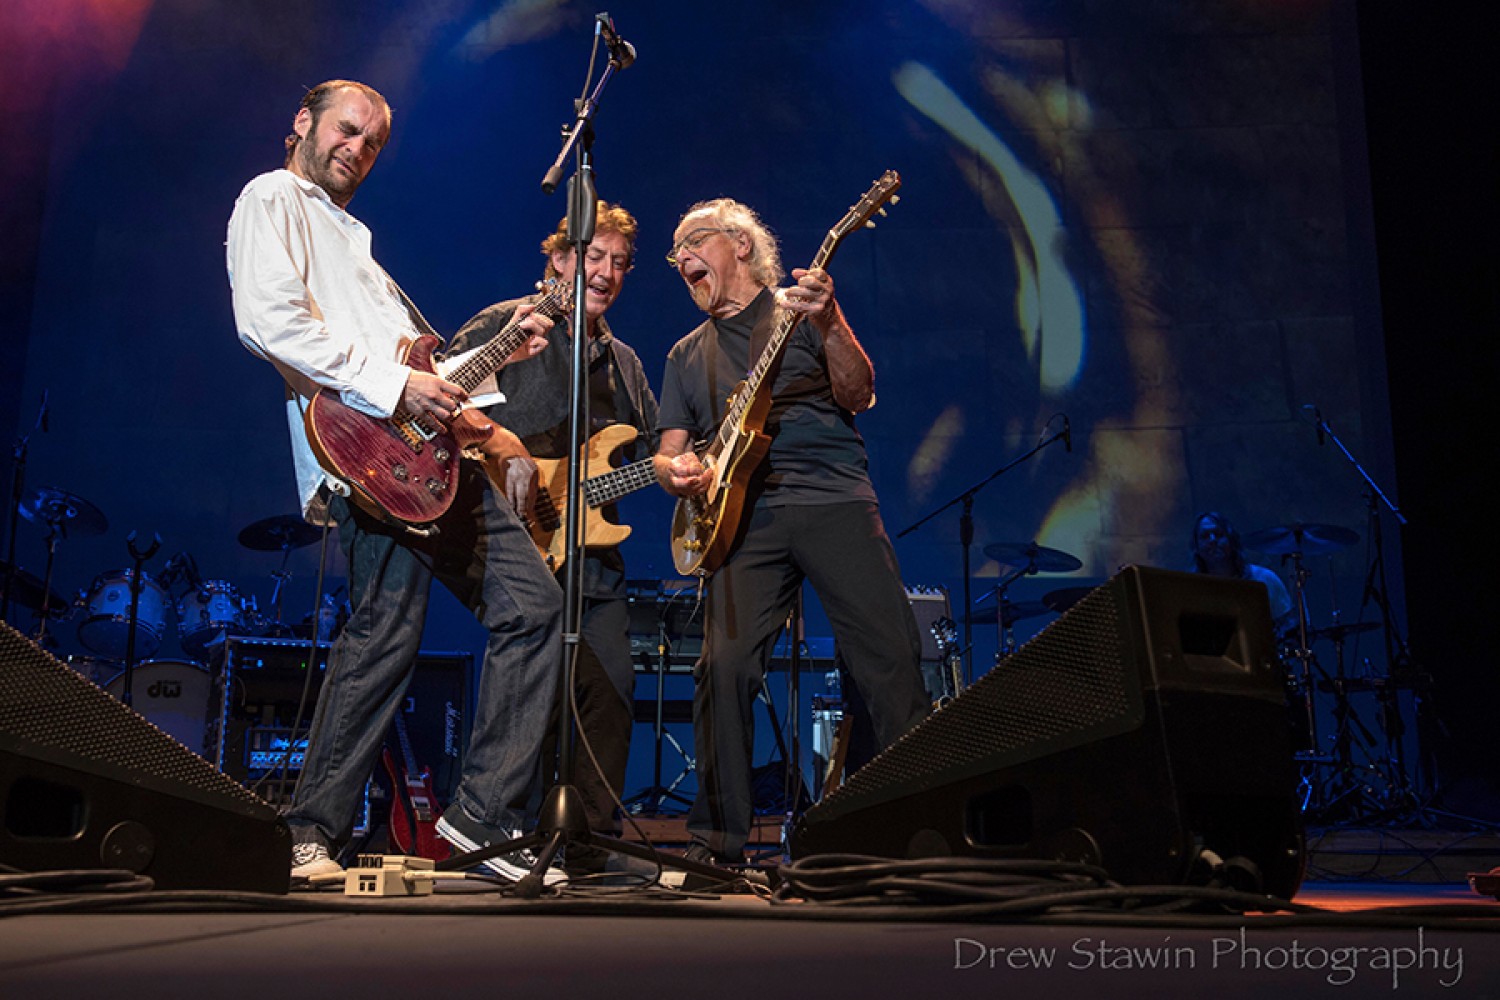 Martin Barre Celebrates Classic Jethro Tull Hits – Capitol Arts